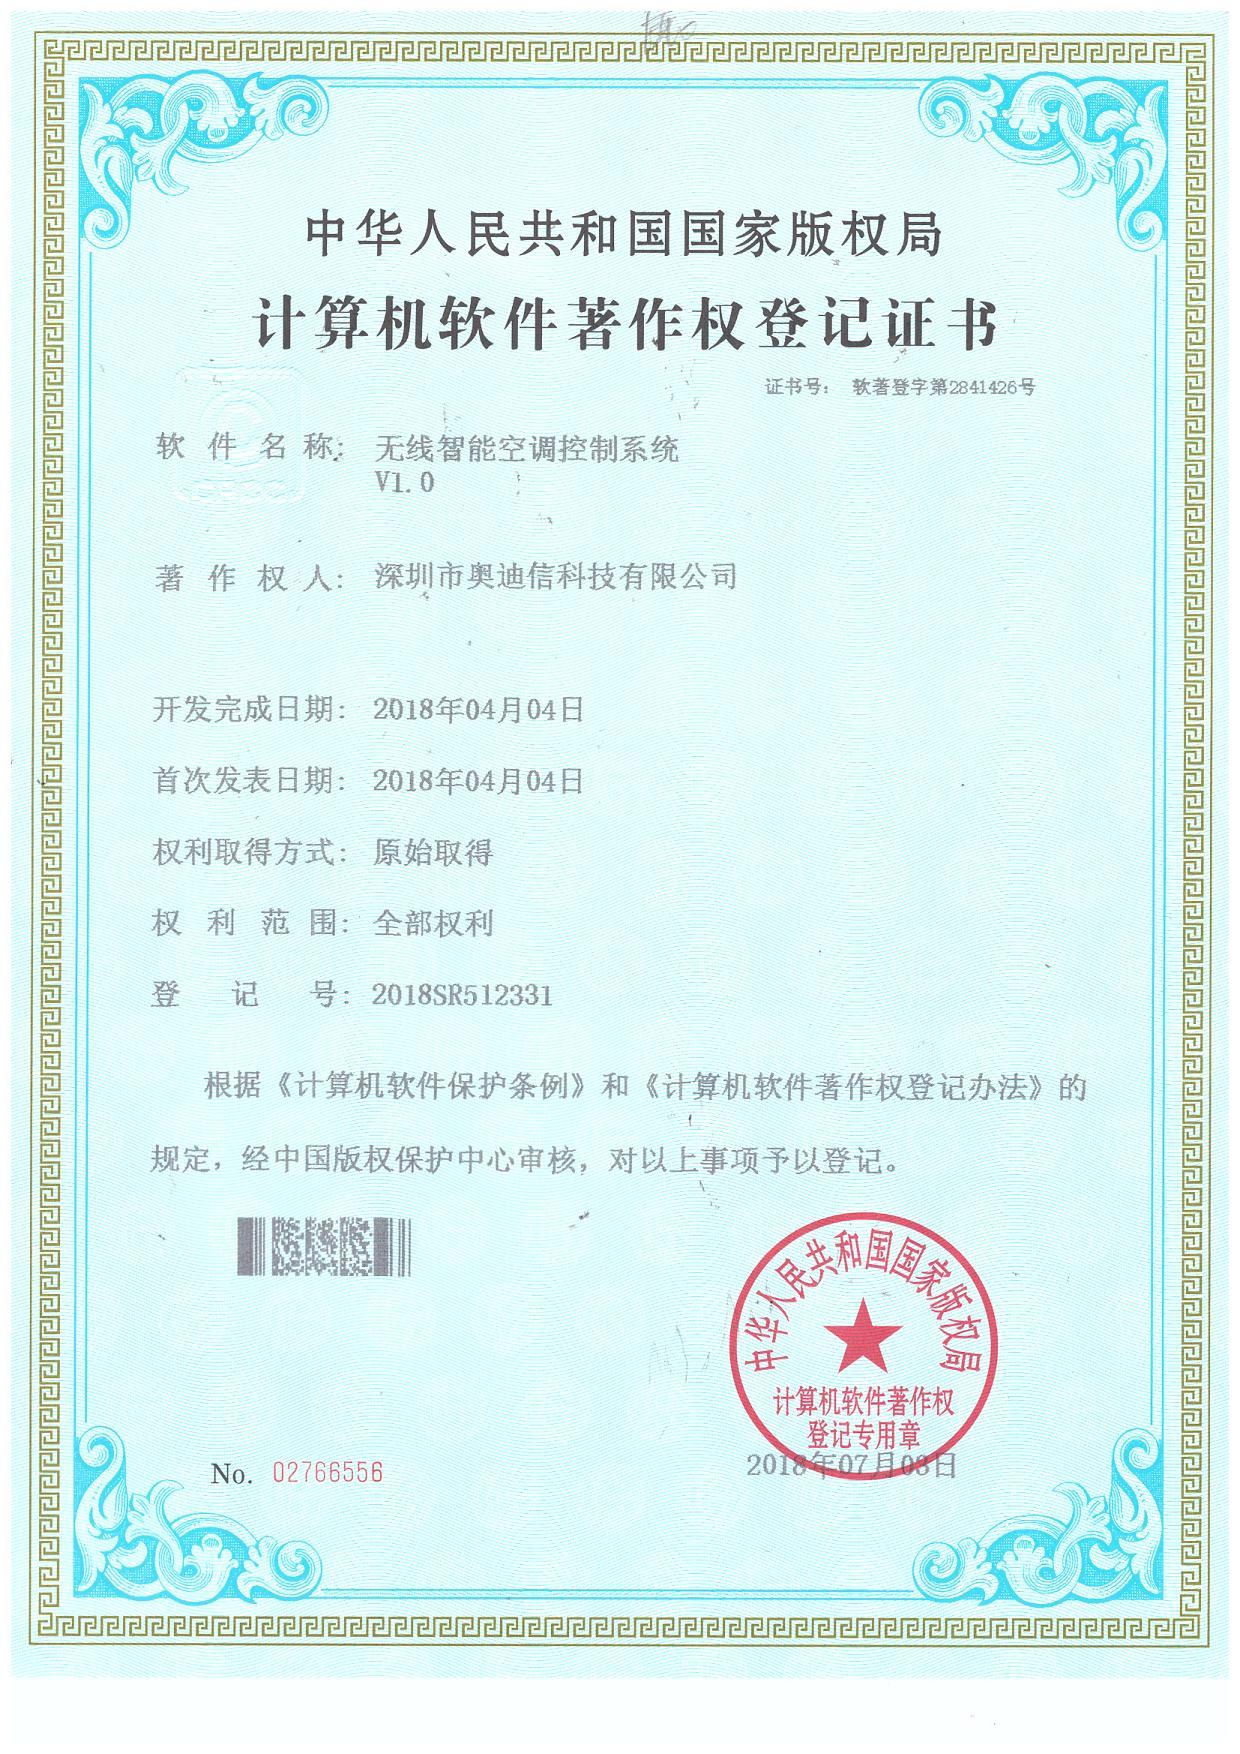 Computer Patent Certificate